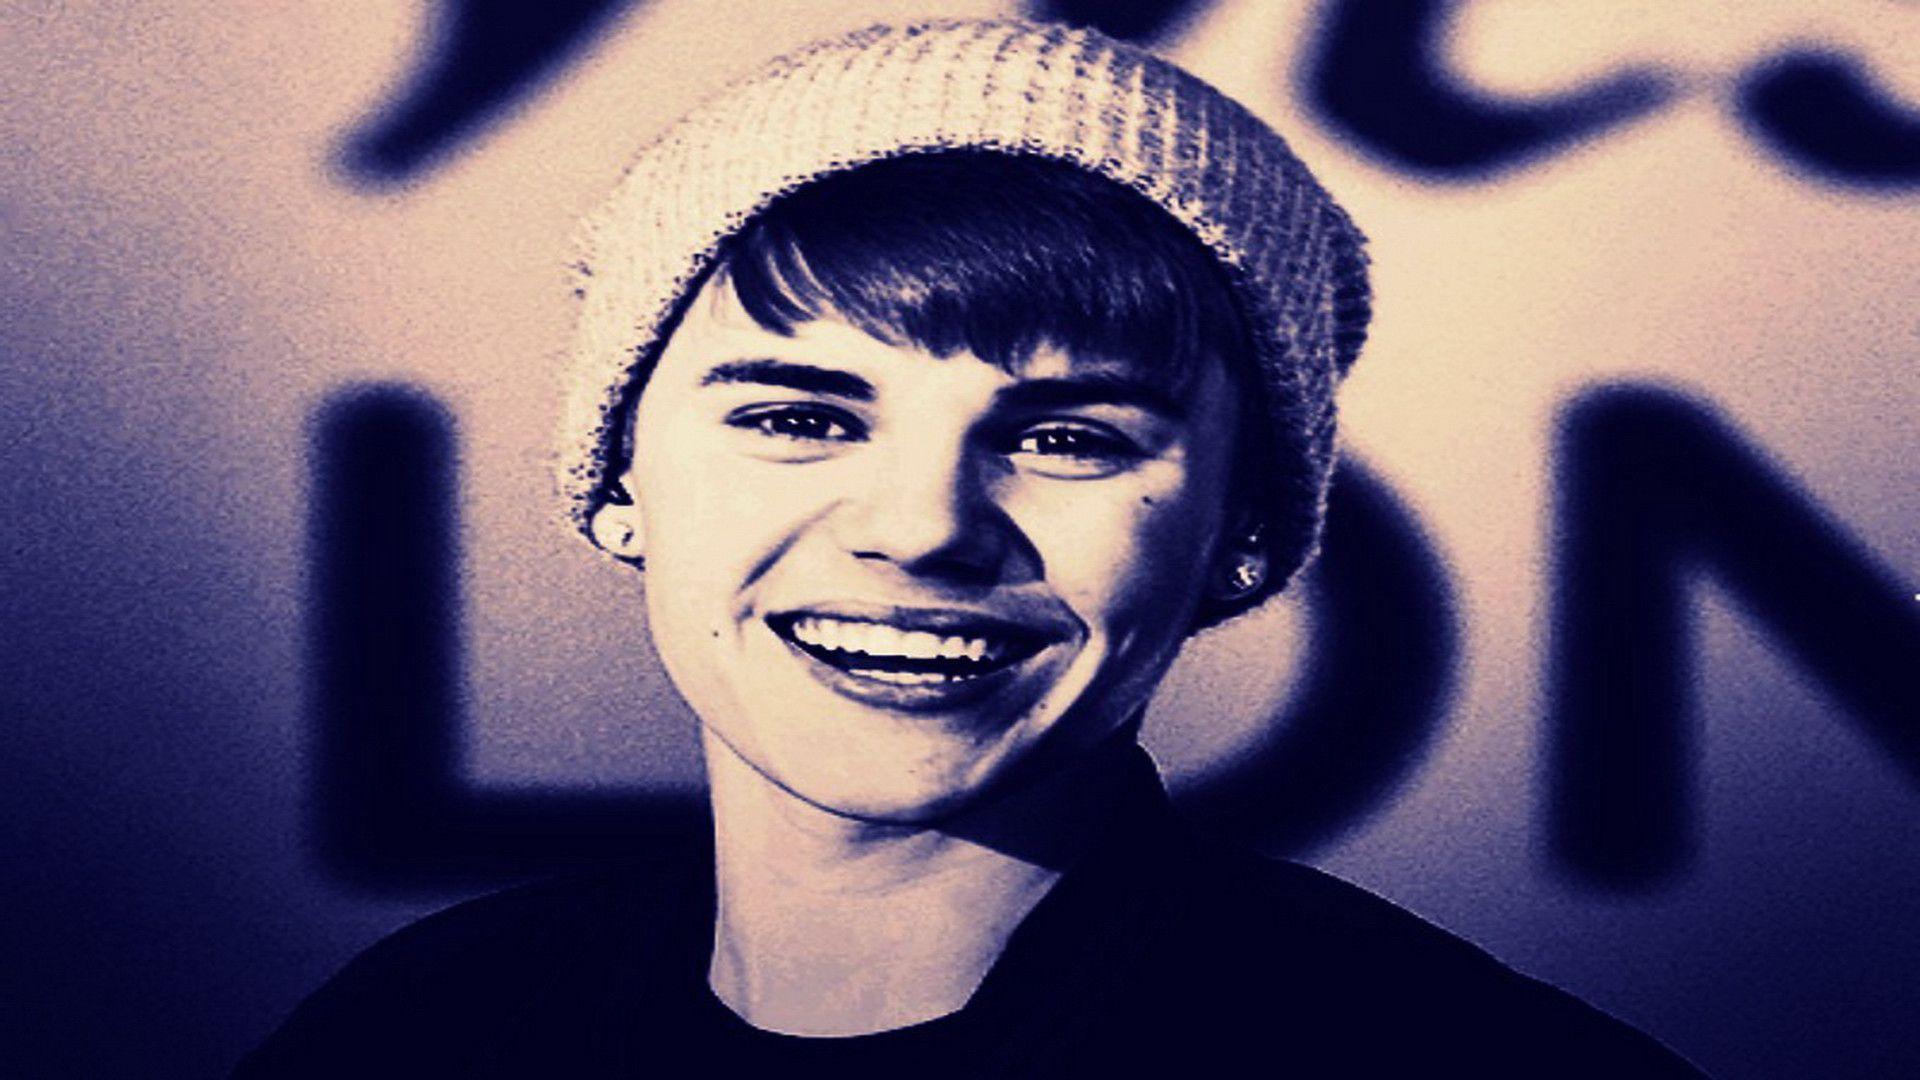 Justin Bieber Wallpaper, Justin Bieber 28043564 800 HD